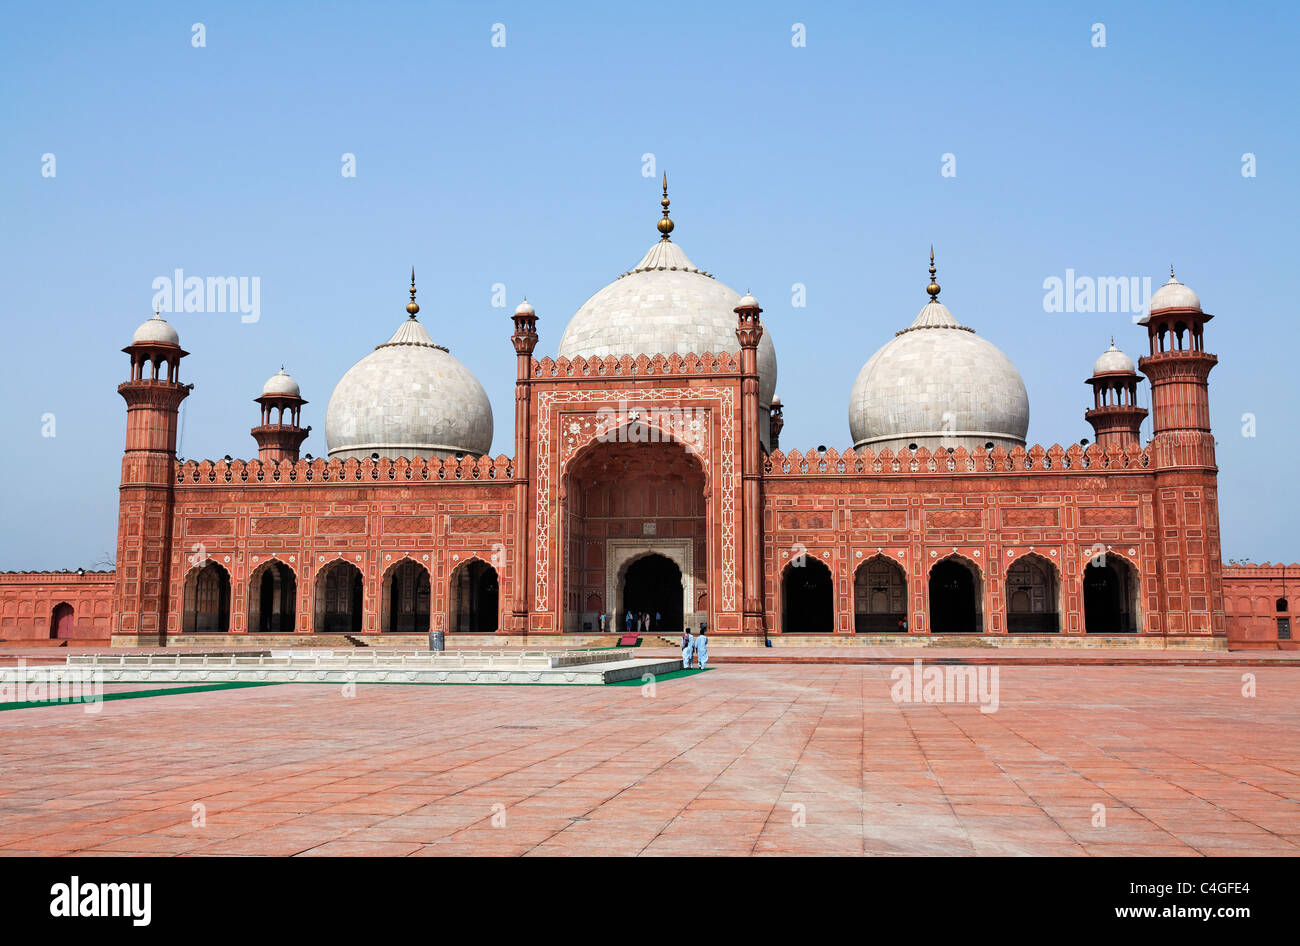 Pakistan - Punjab - Lahore - Courtyard of the Badshahi mosque Stock Photo